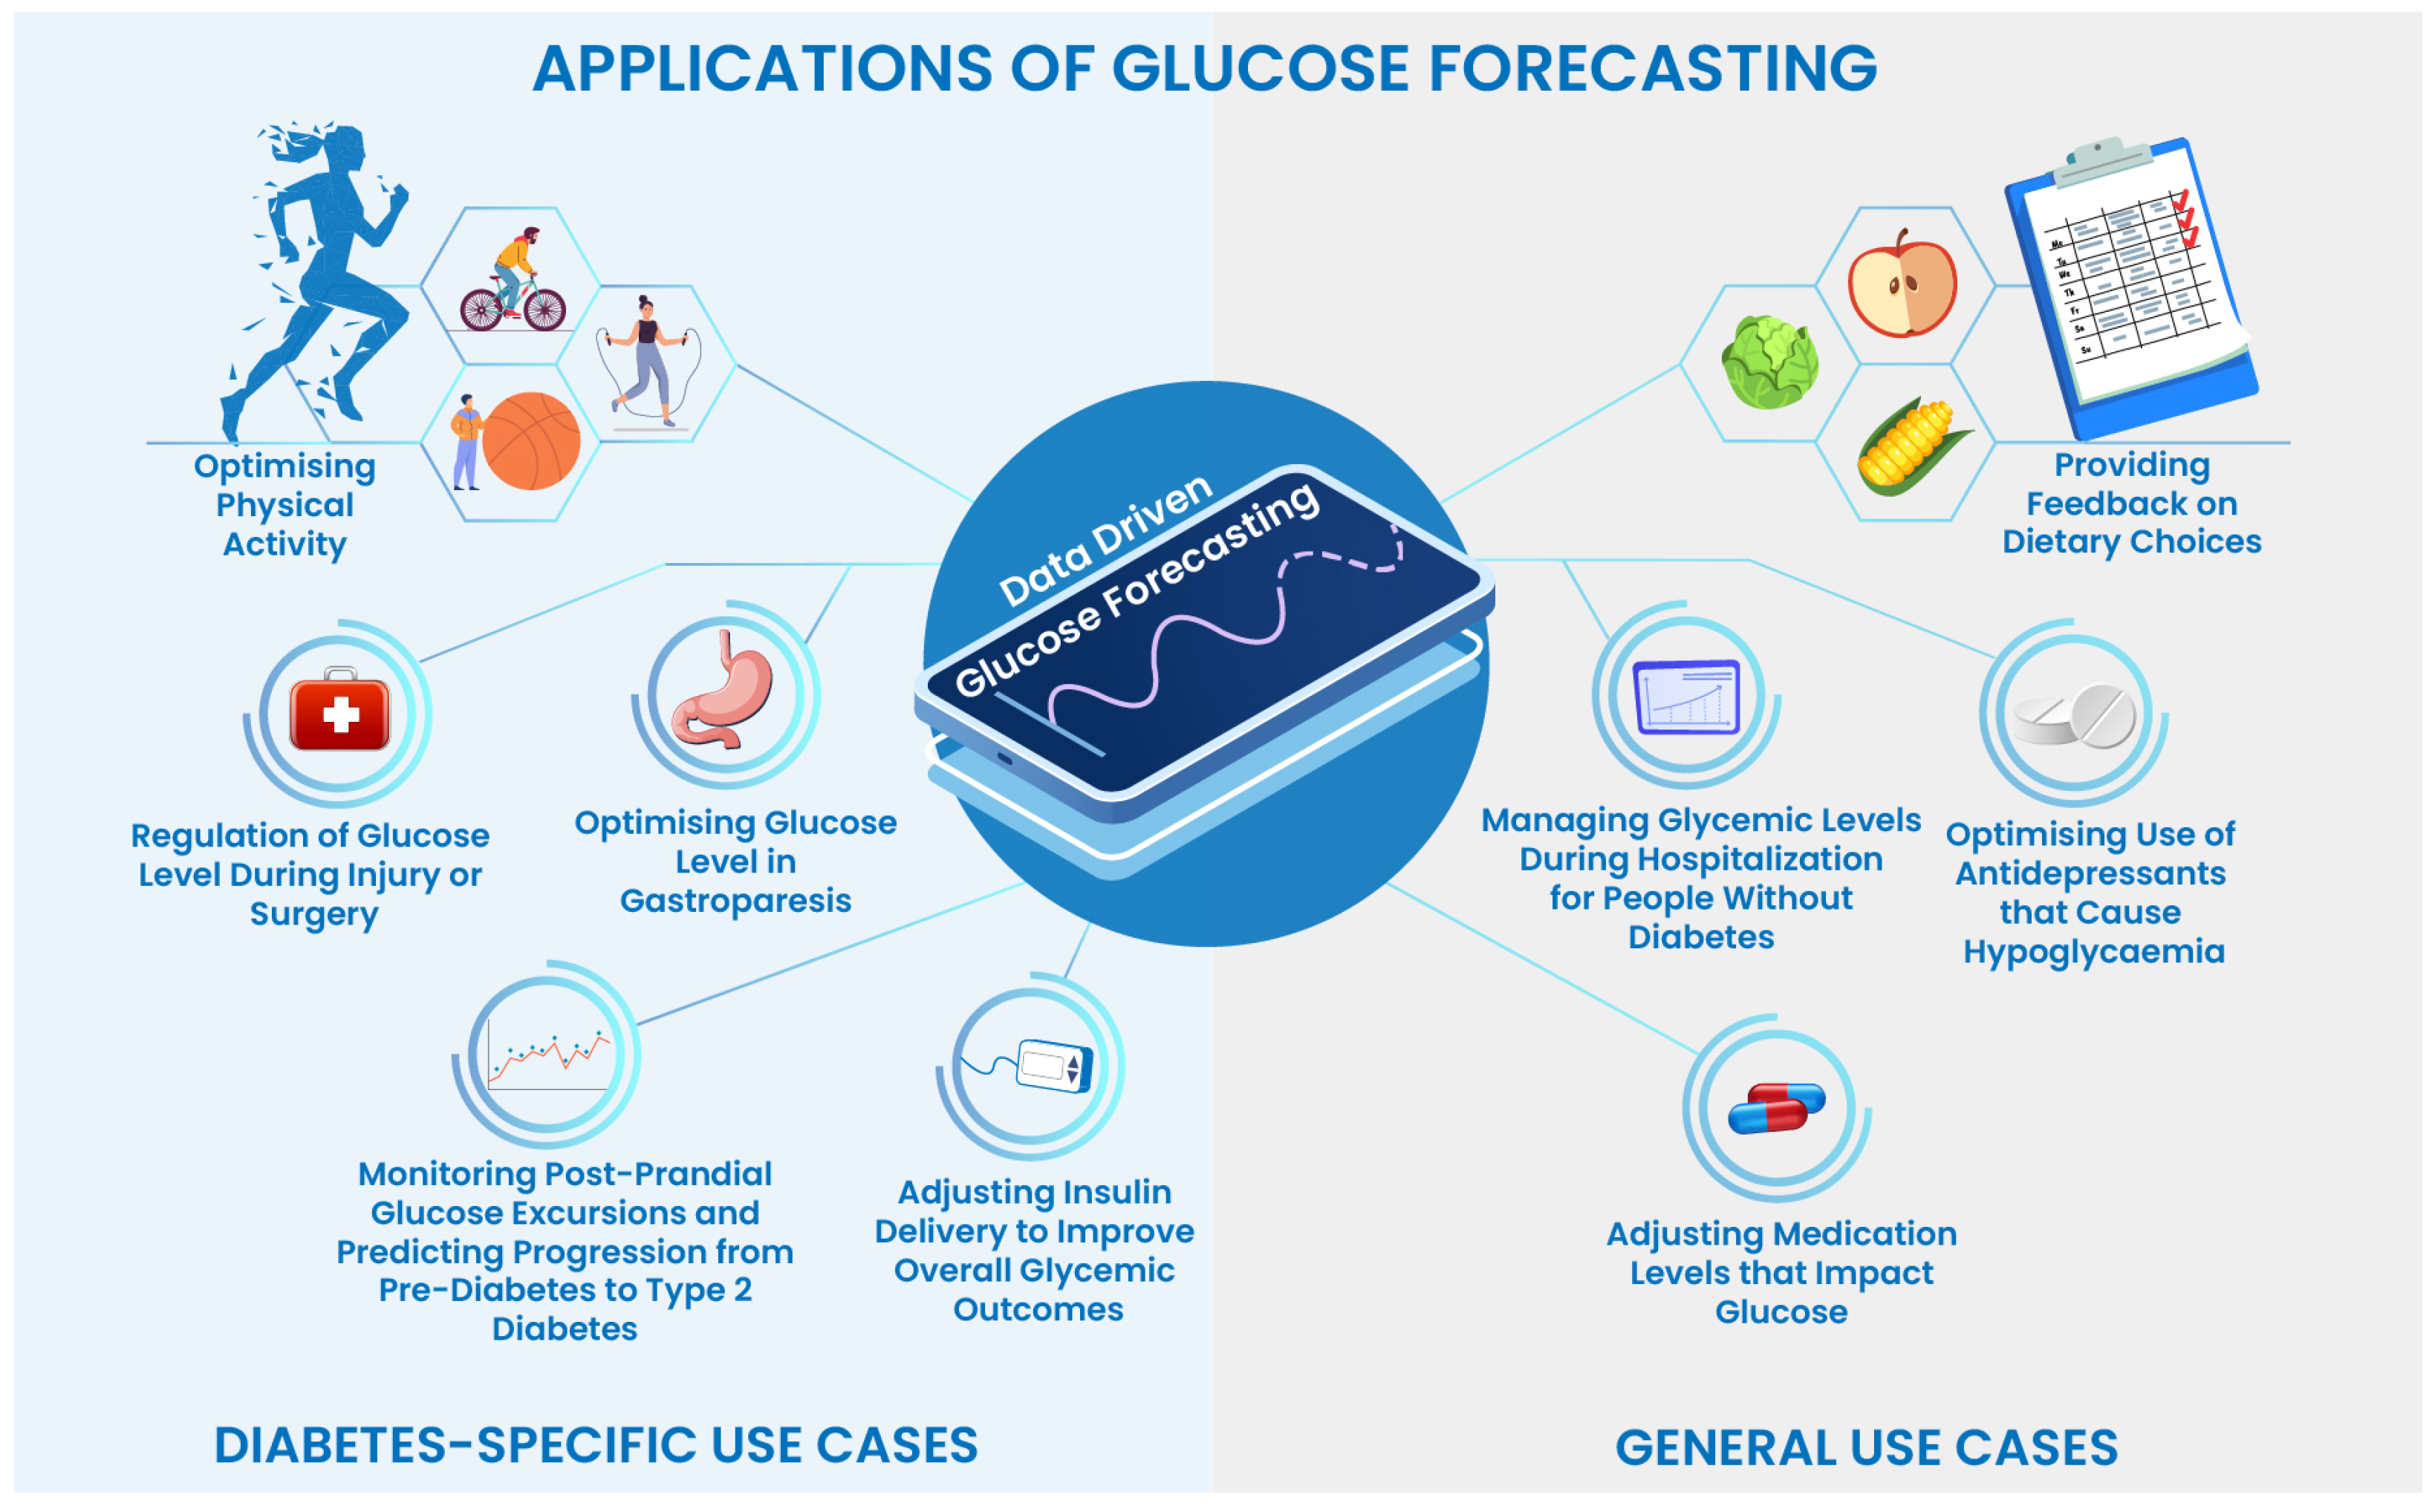 Automated glucose management